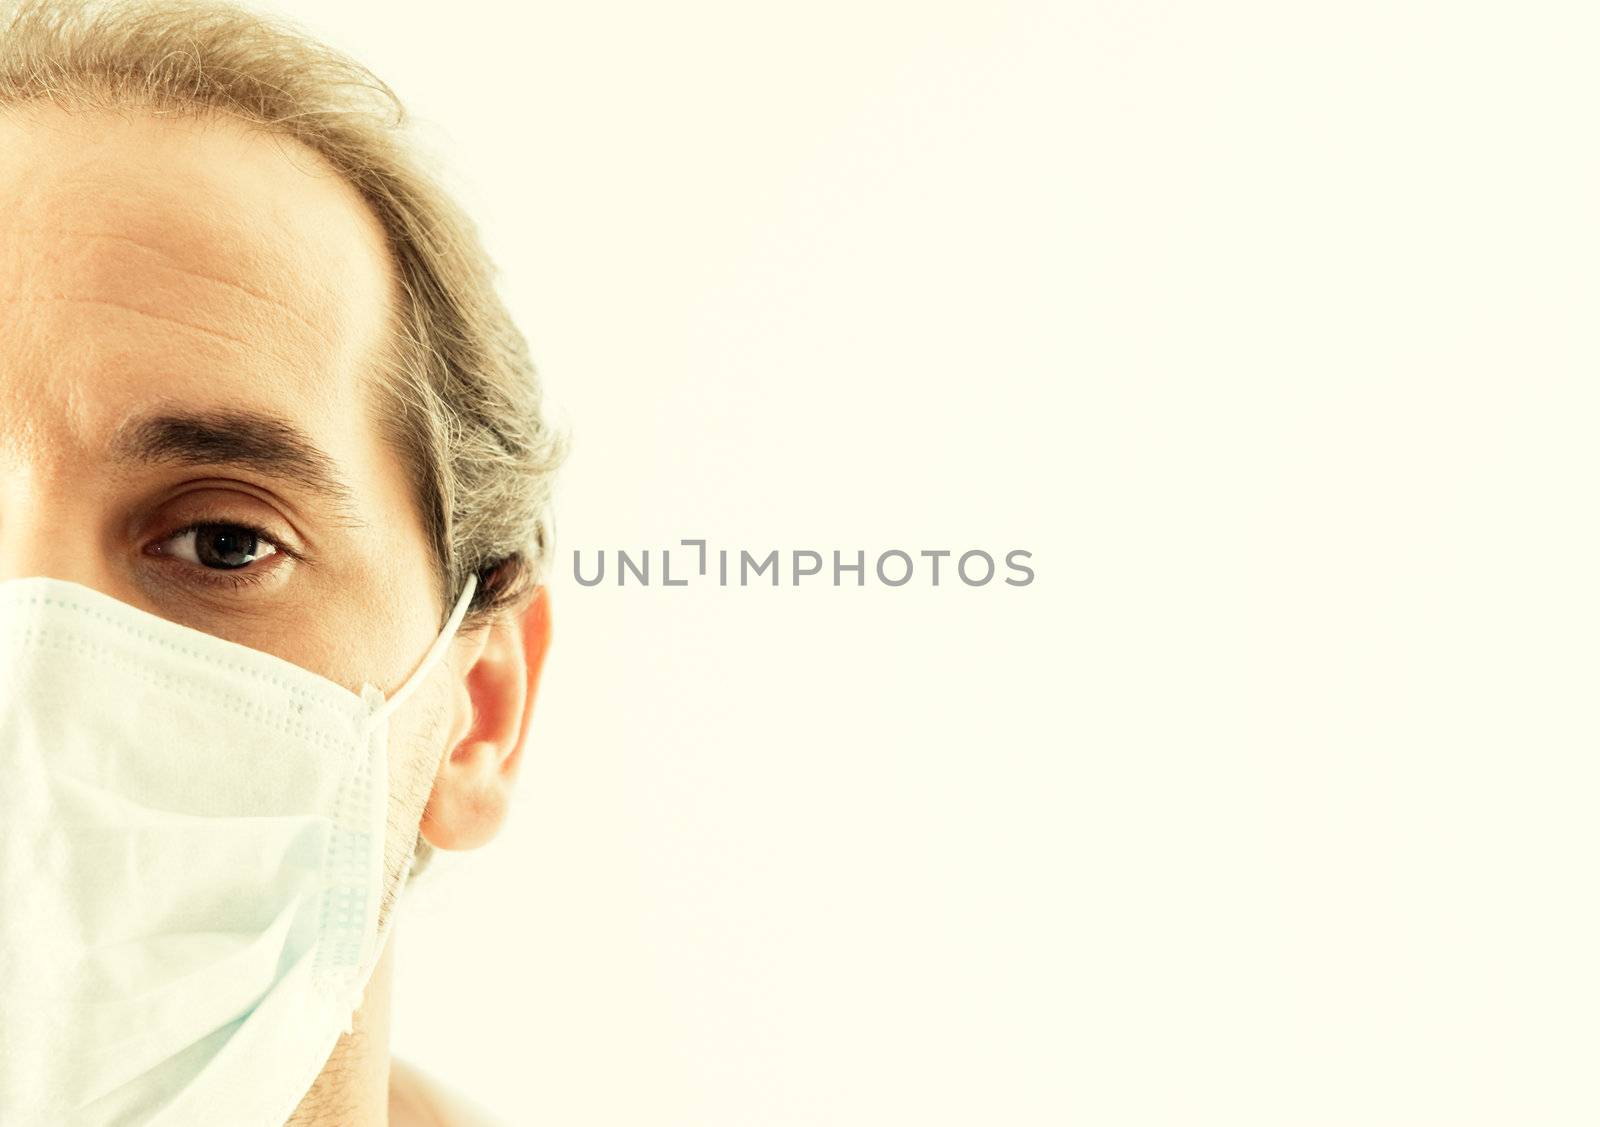 Doctor closeup with flu mask